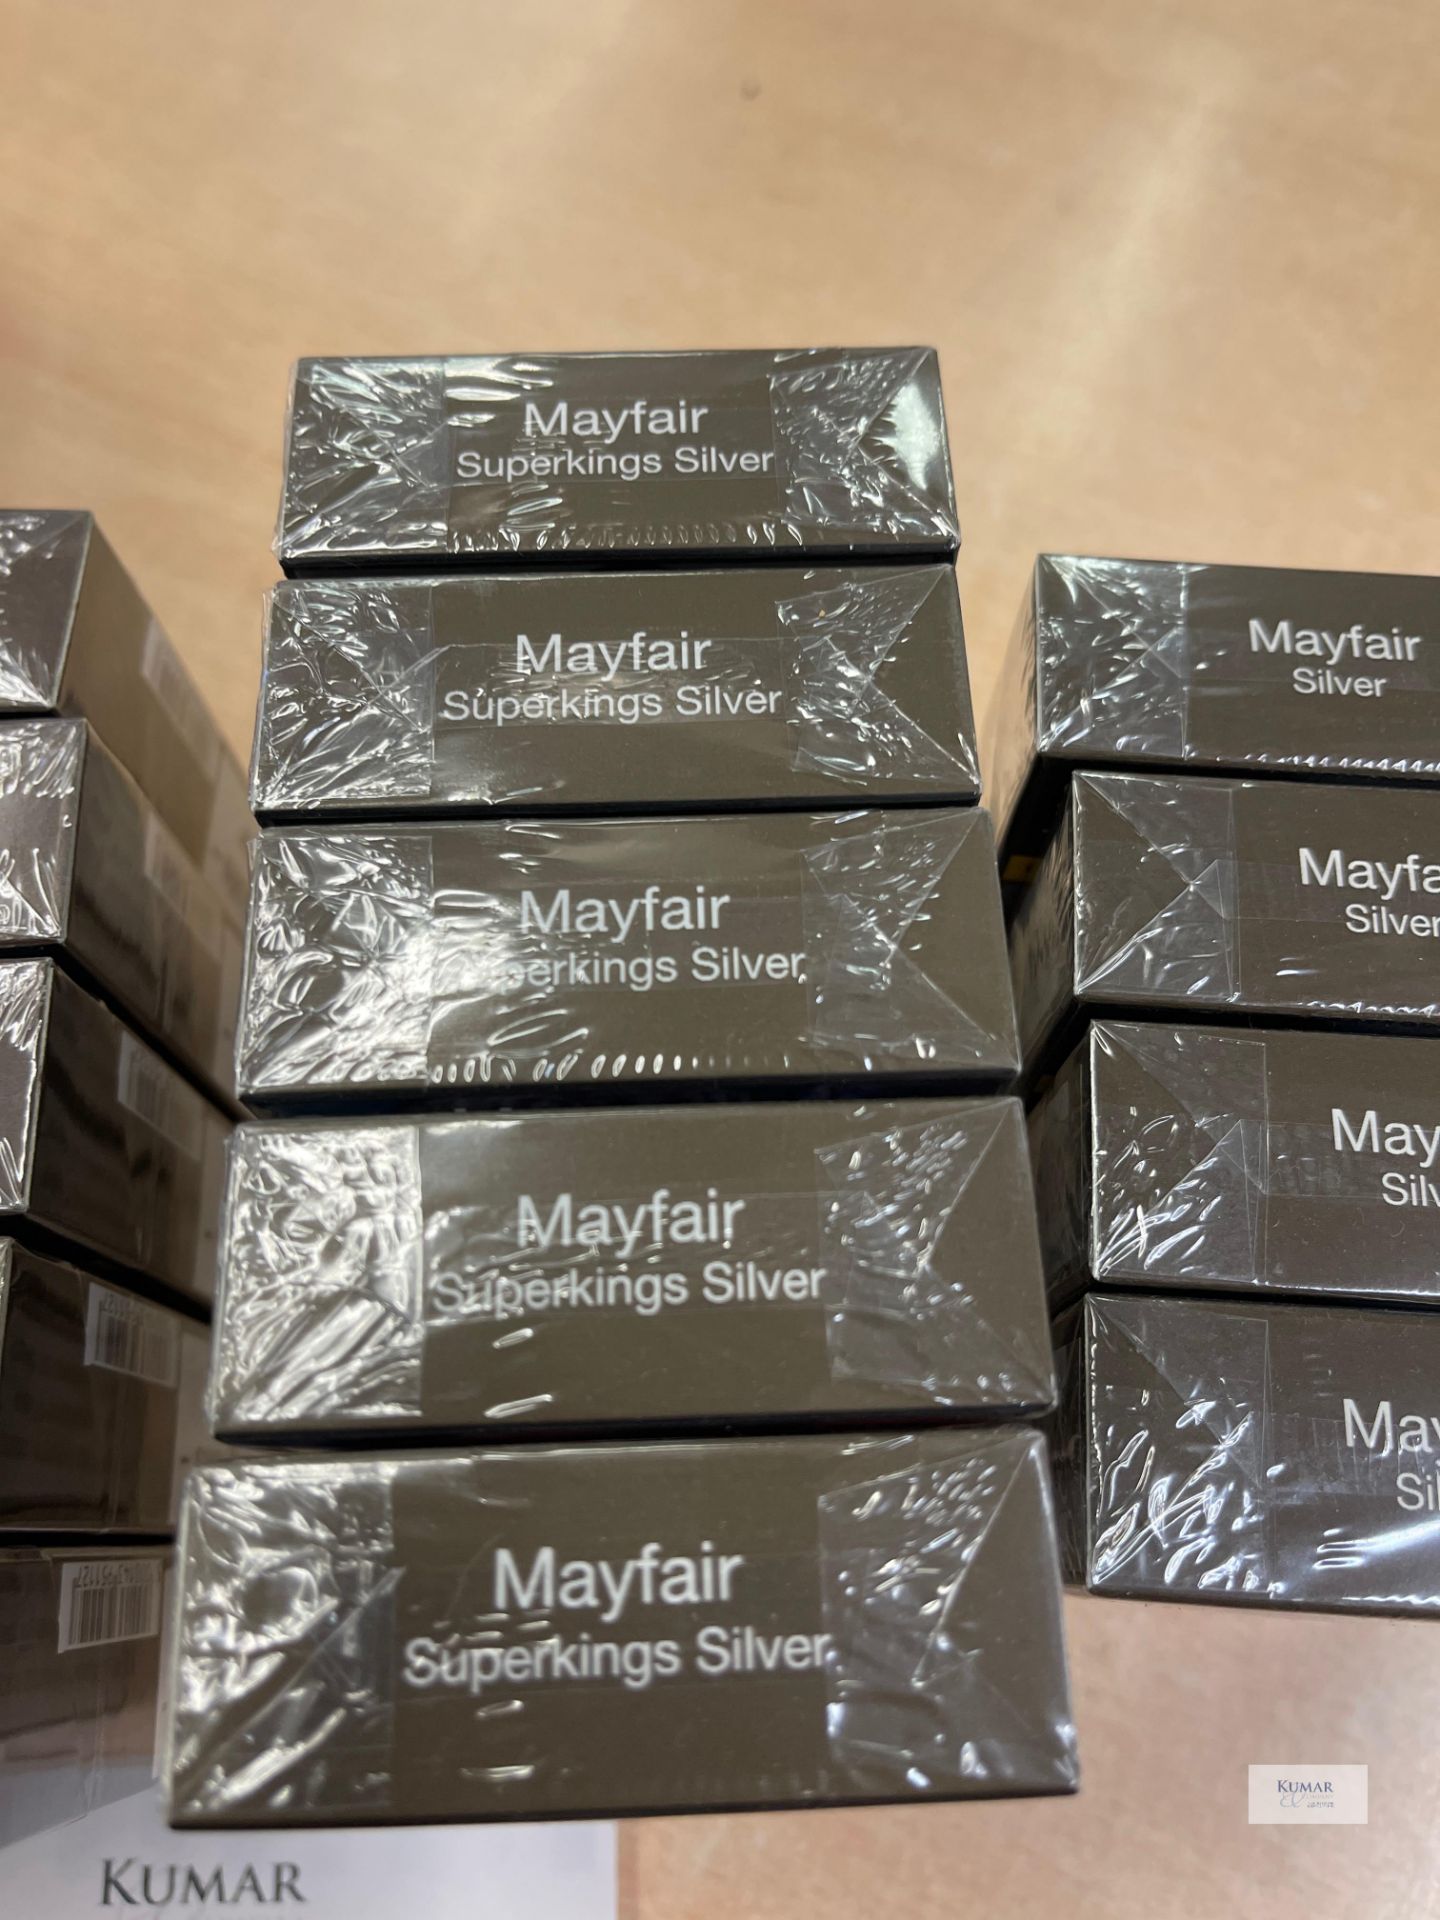 10 Packs: Mayfair Super kings Original Blue 20 Cigarettes, 5 Packs: Mayfair Original Blue 20 - Image 7 of 10